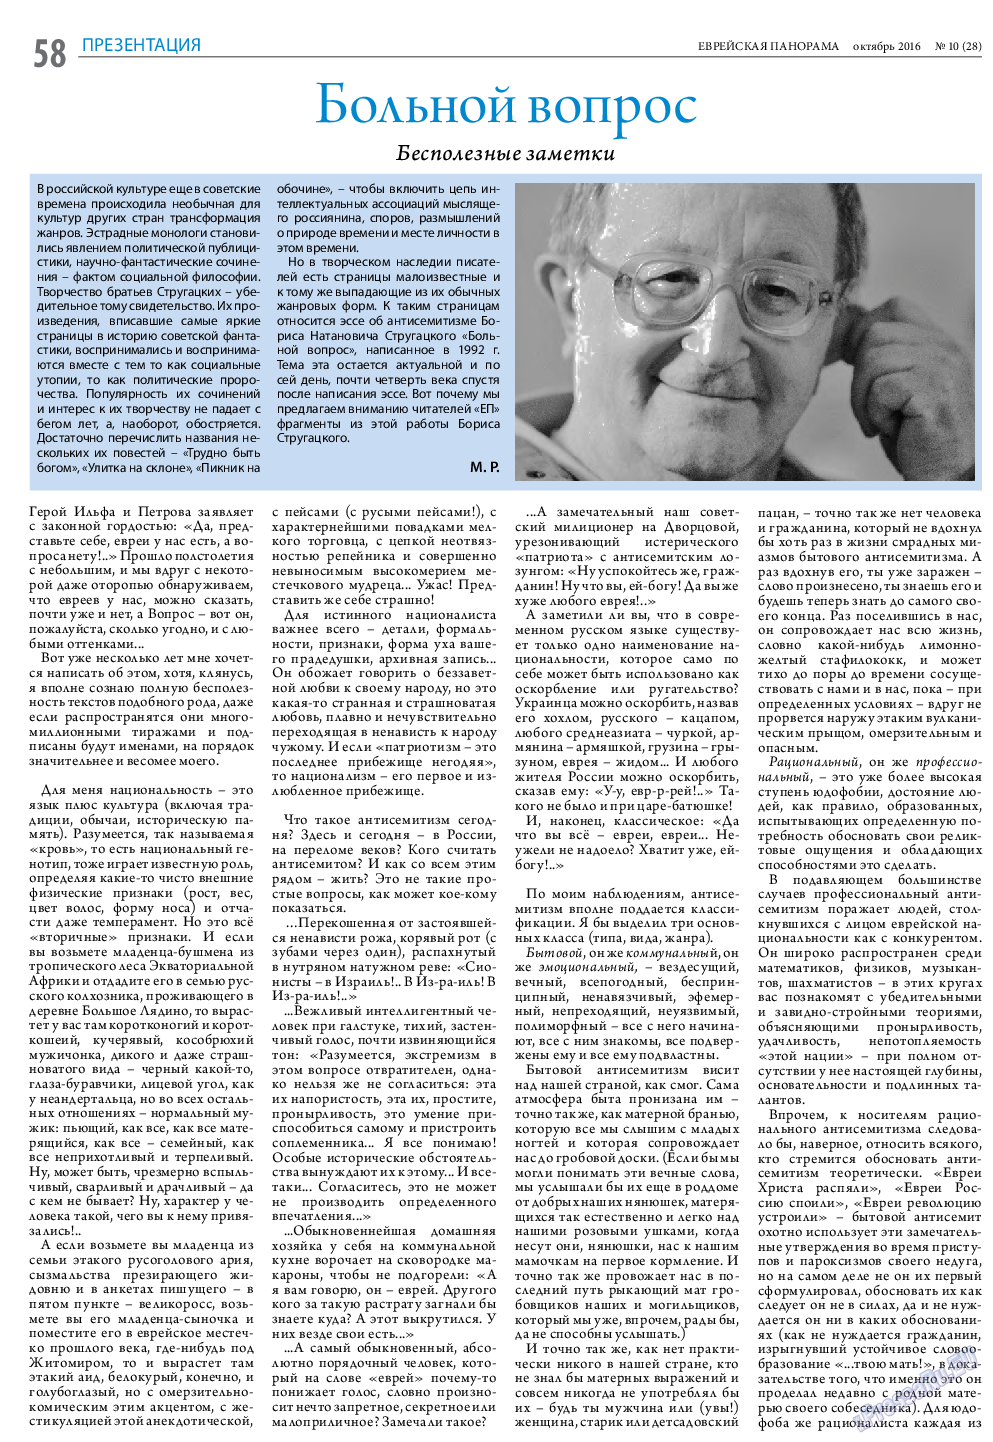 Еврейская панорама, газета. 2016 №10 стр.58